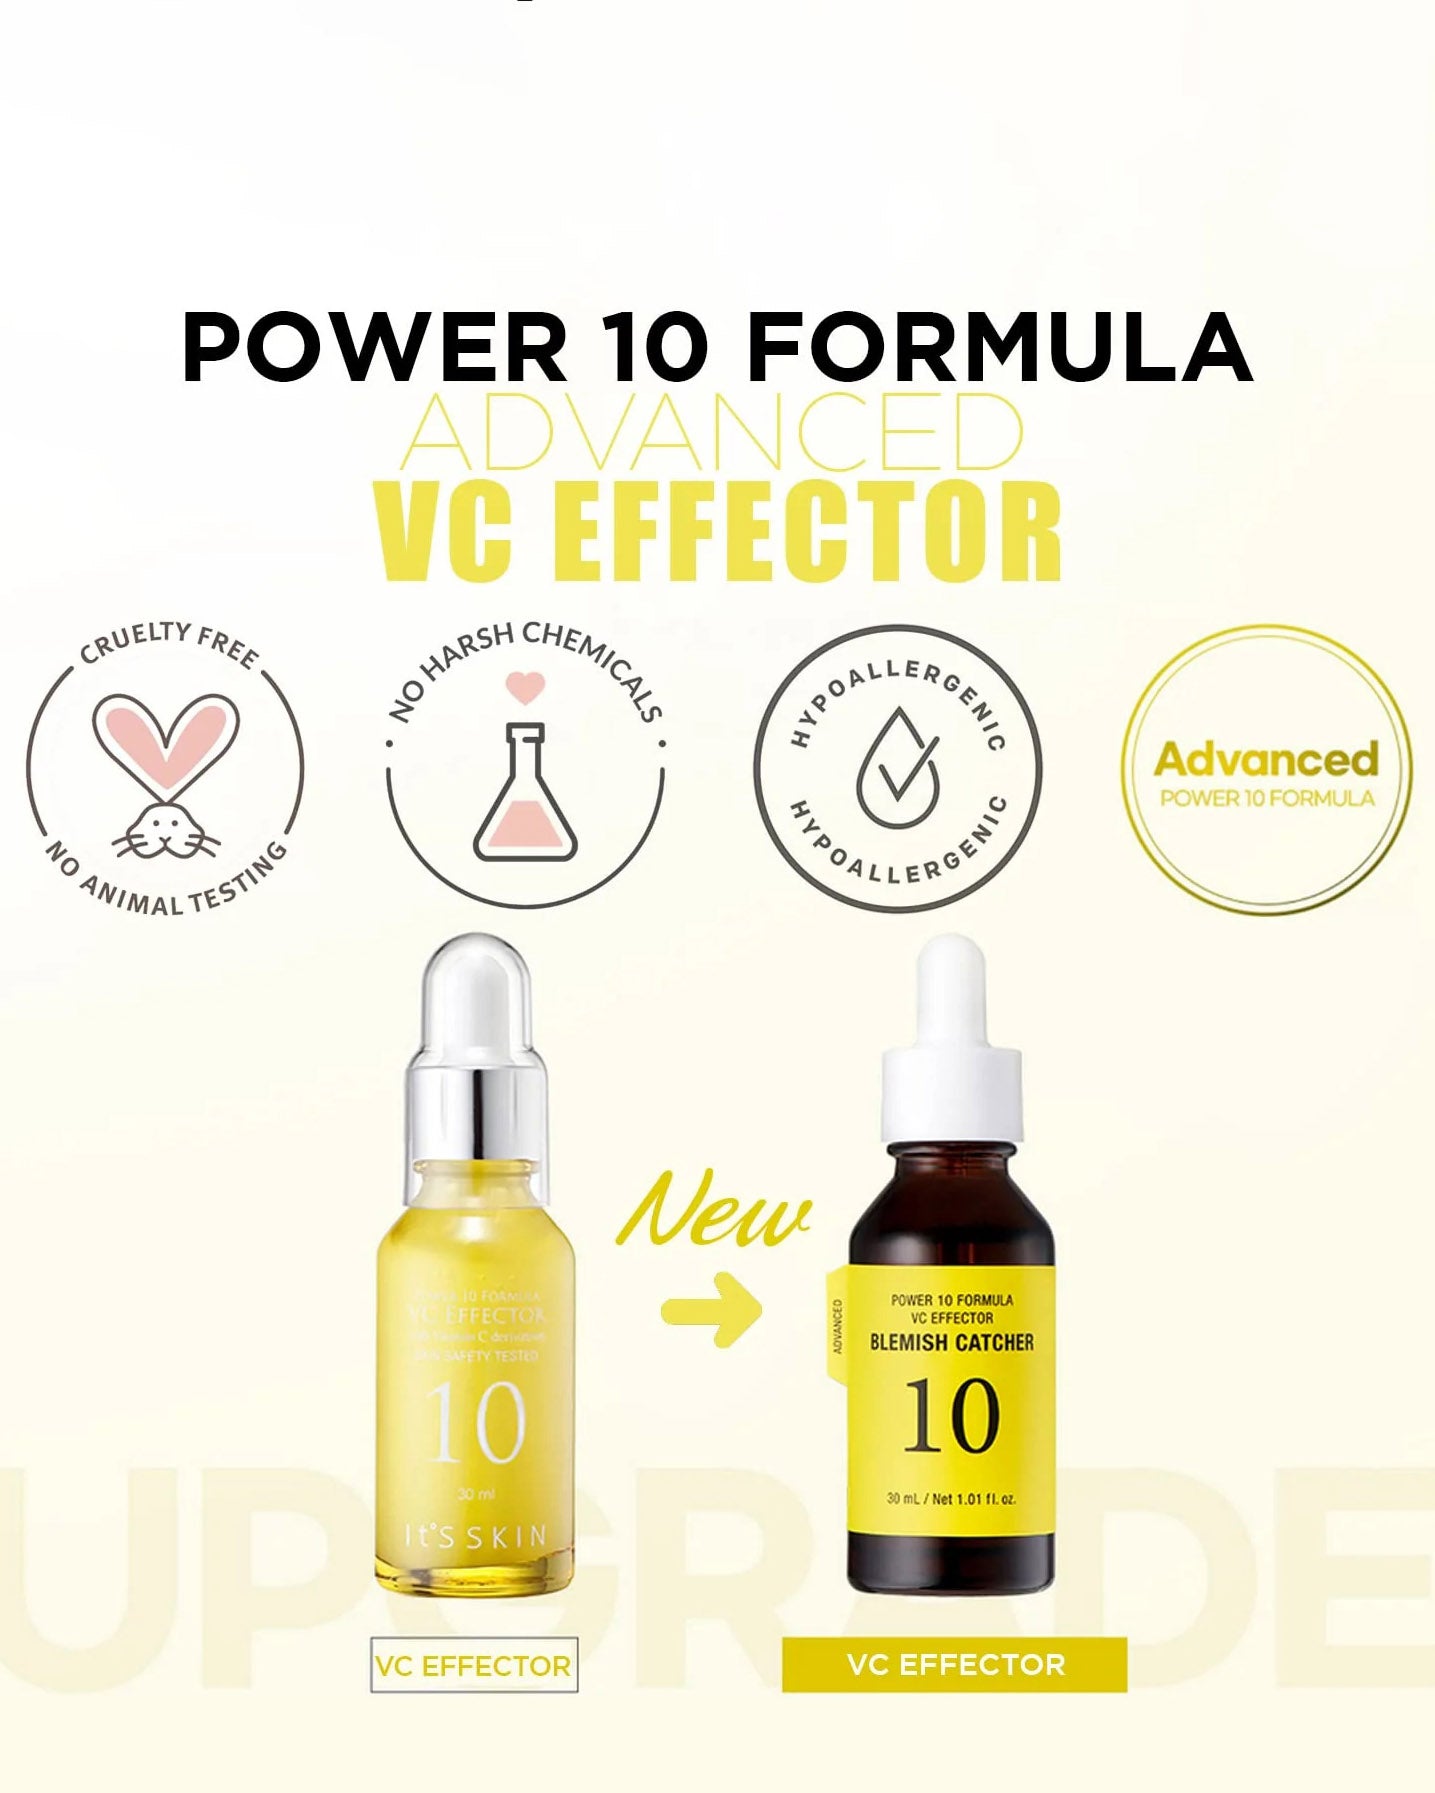 It's Skin Power 10 Formula VC Effector AD Blemish Catcher